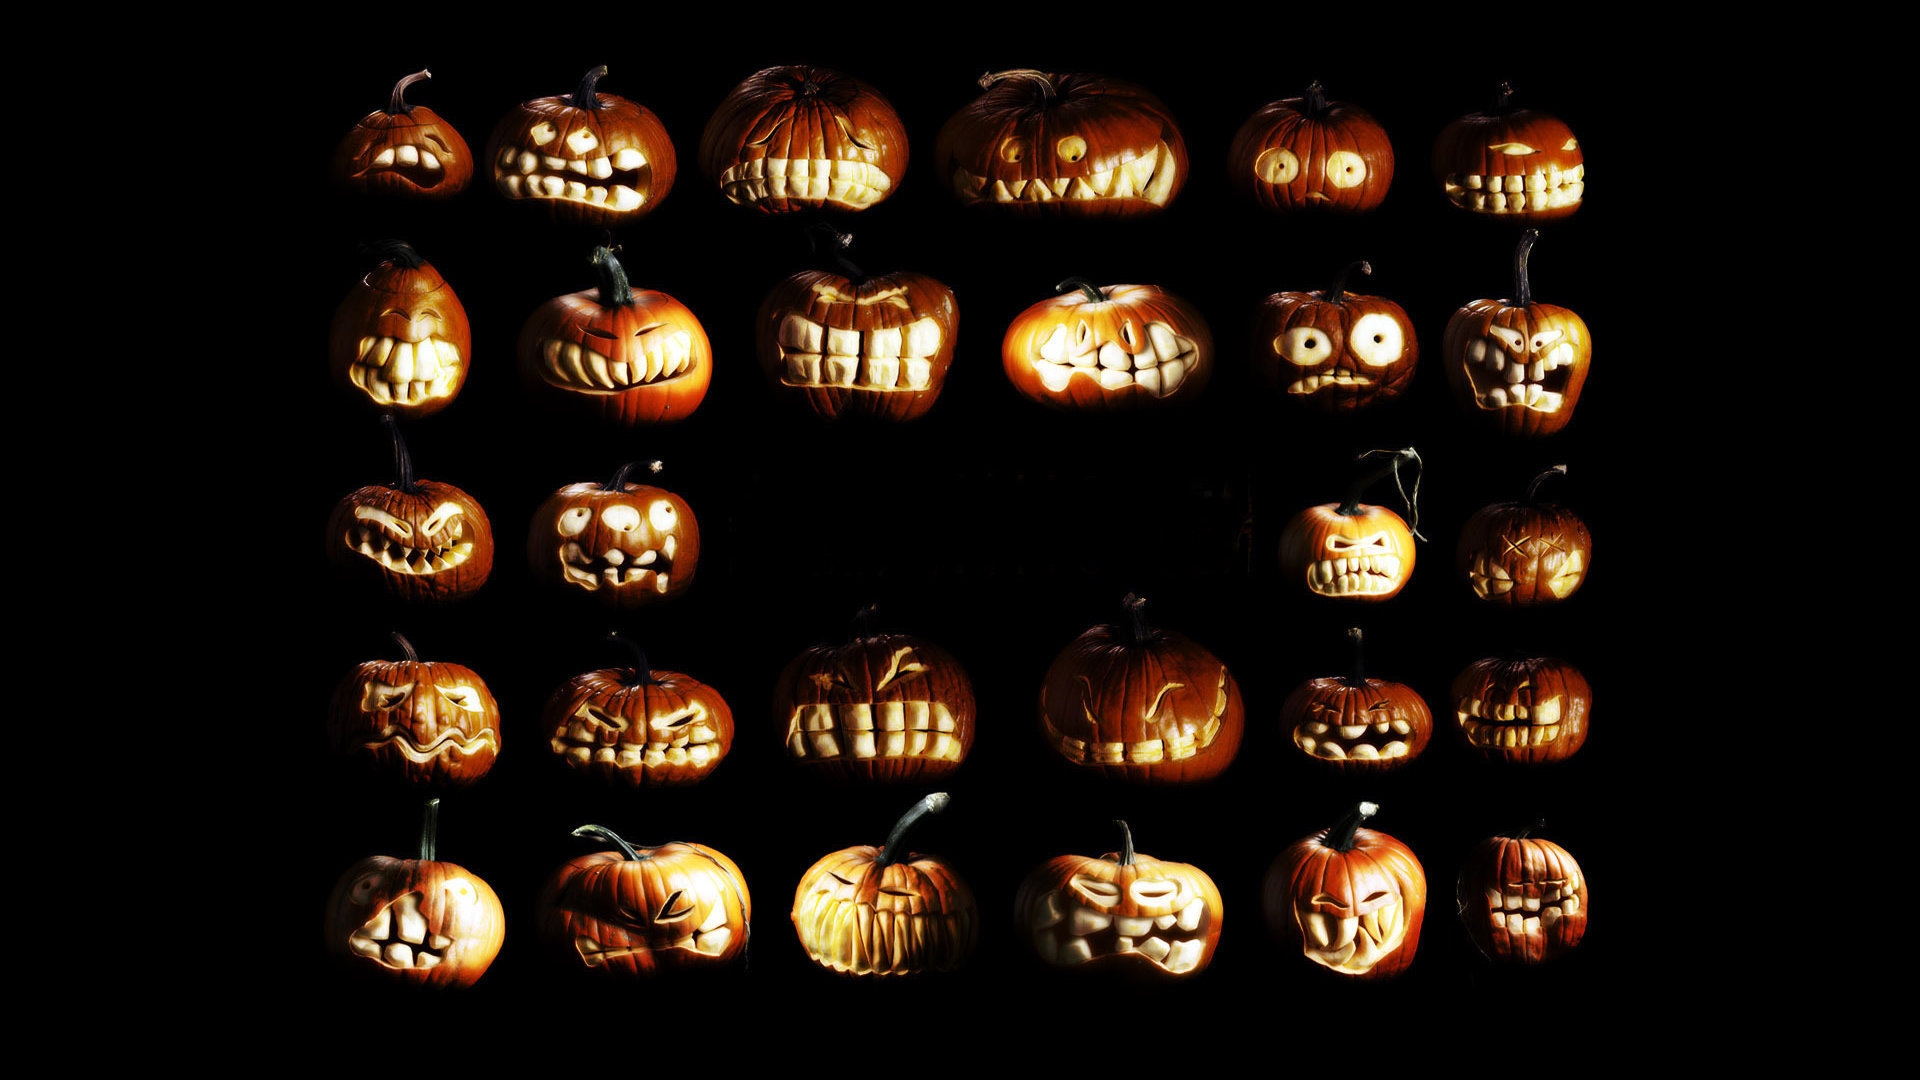 Pumpkin figures for Halloween for 1920 x 1080 HDTV 1080p resolution